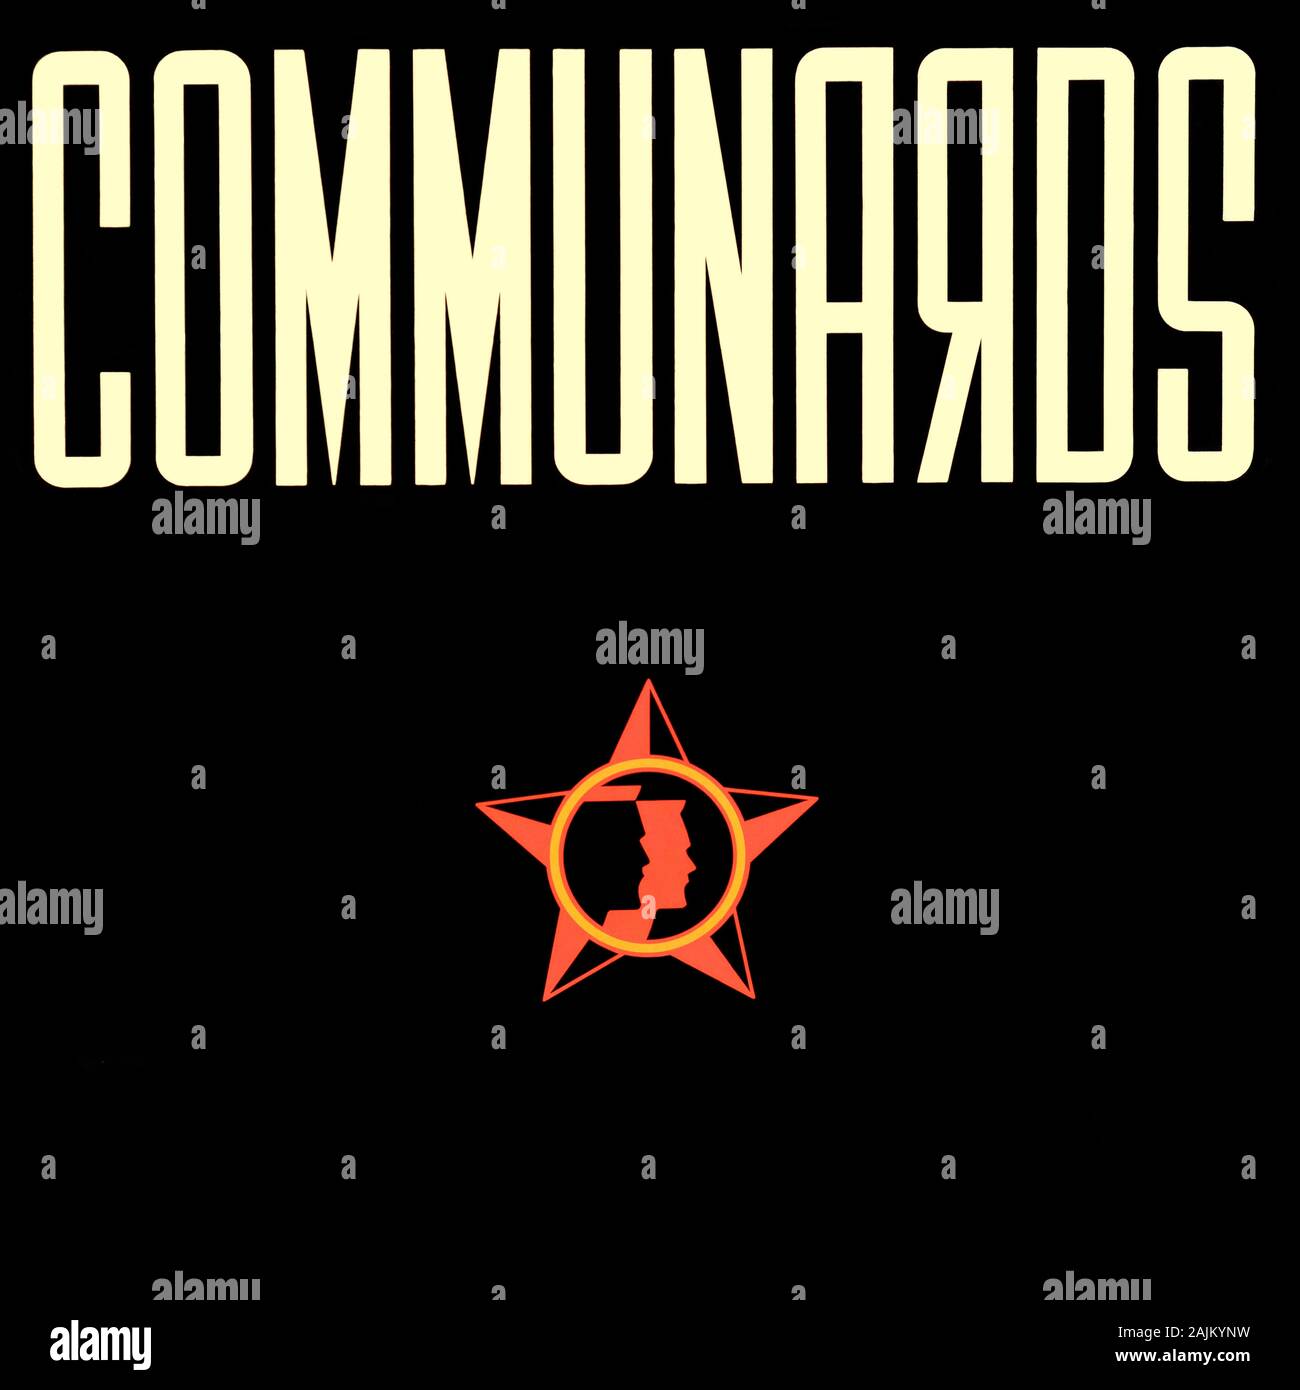 Communards - portada original del álbum de vinilo - Communards - 1986 Foto de stock